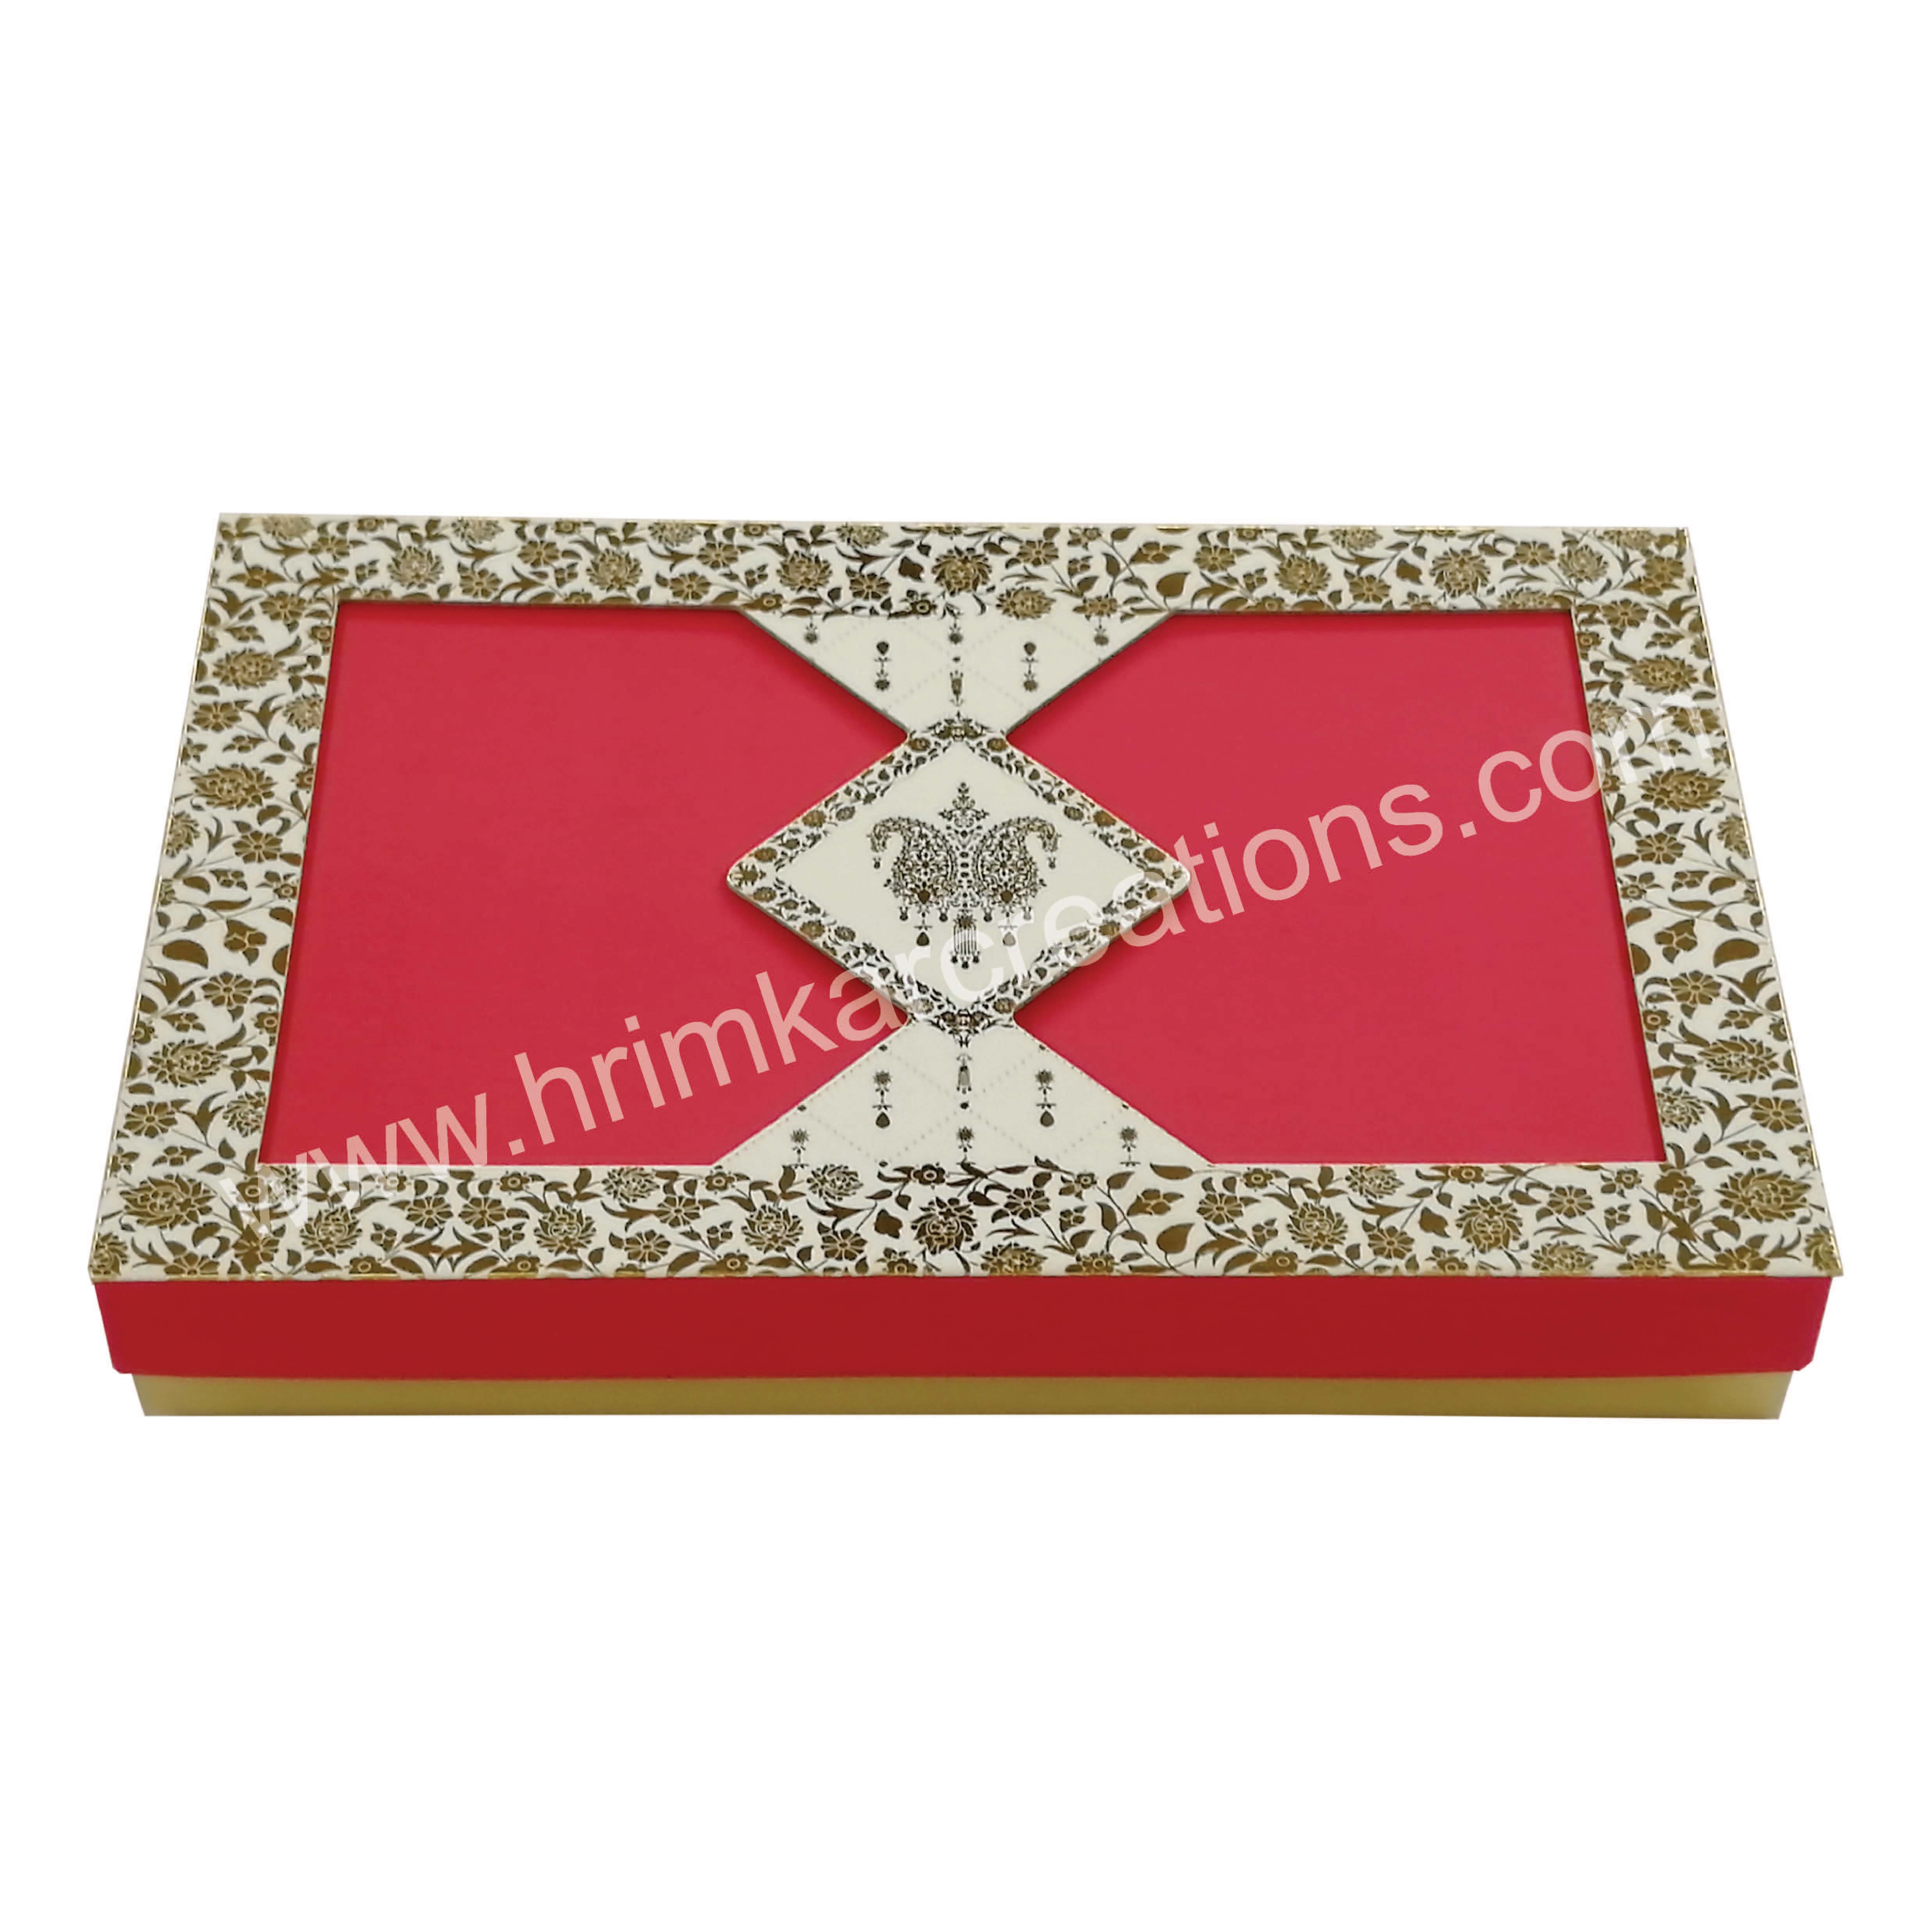 Jharokha covered 1/2 kg sweet packaging box